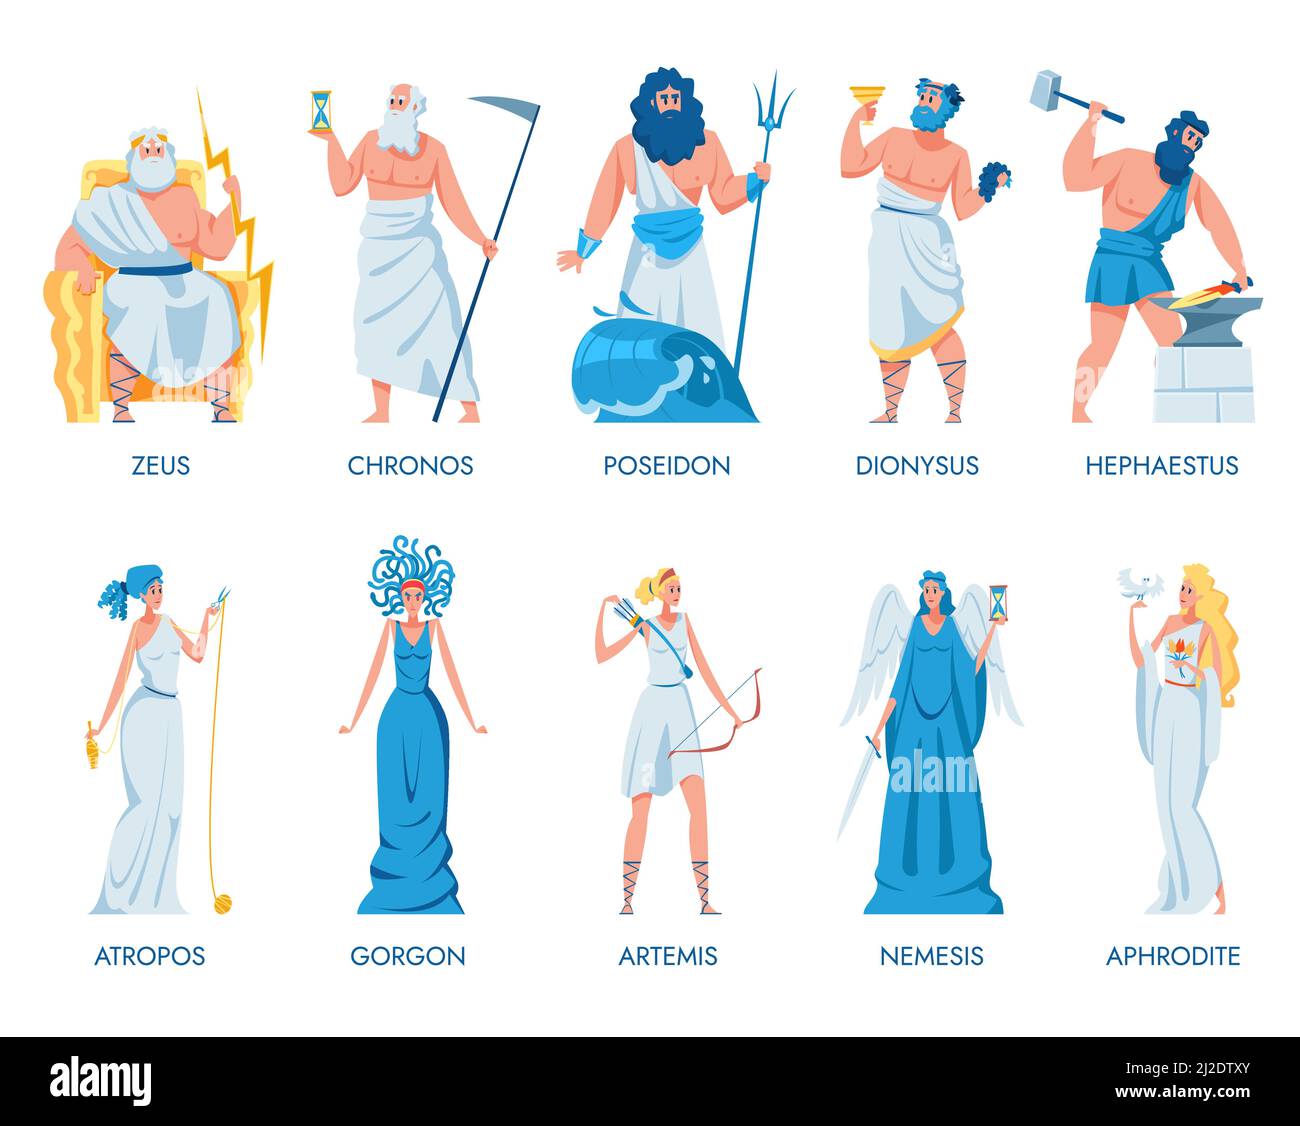 Alte griechische Götter und Göttinnen eingestellt. Zeus, Dionysos, Artemis, Hephaestus, Chronos, Atropos, Gorgon, Nemesis, Aphrodite, Poseidon. Vektorgrafik Stock Vektor